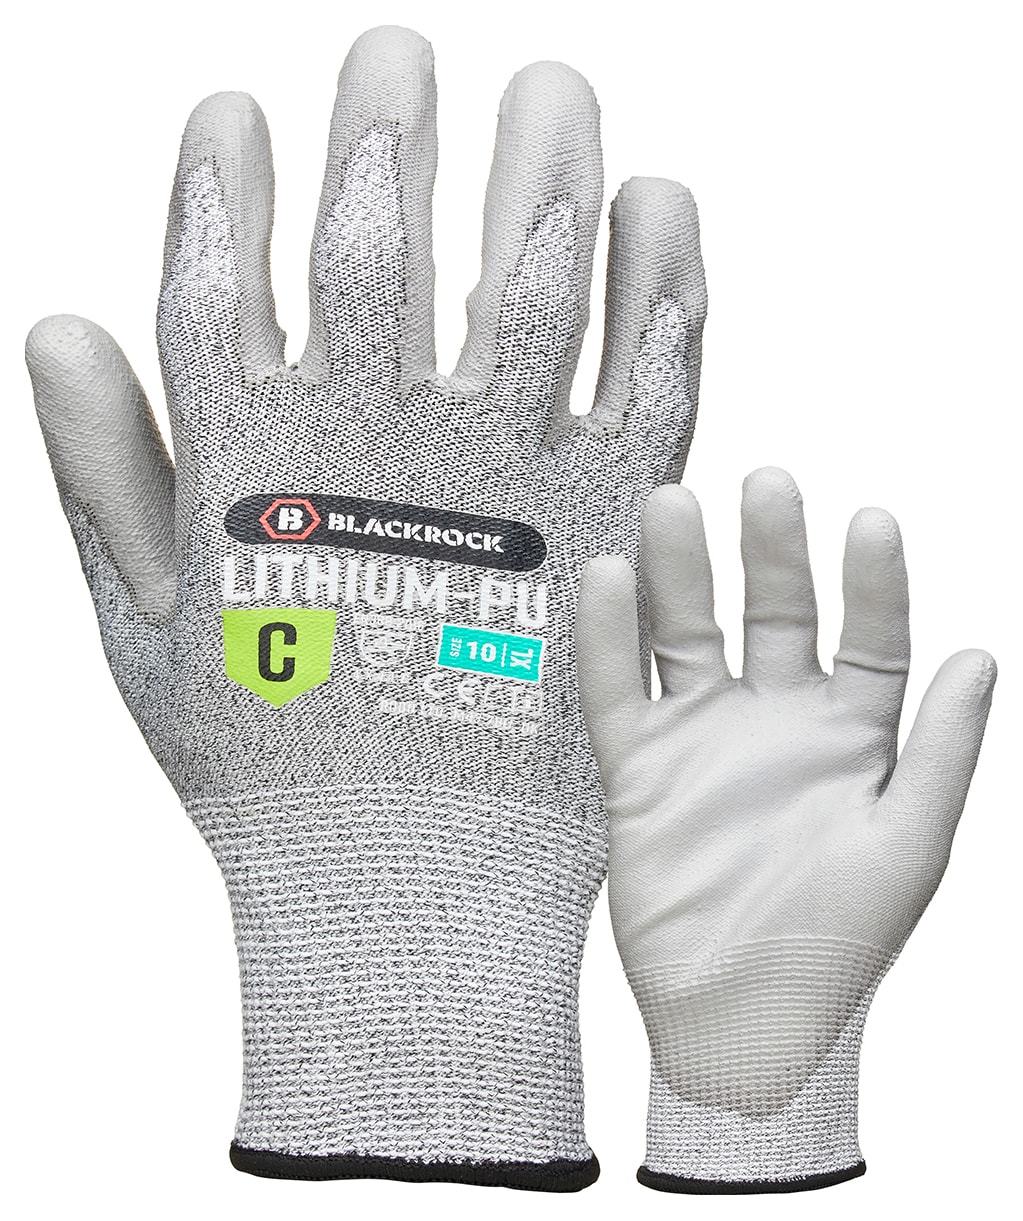 Blackrock PU Coated Cut Resistant Grey Gloves -